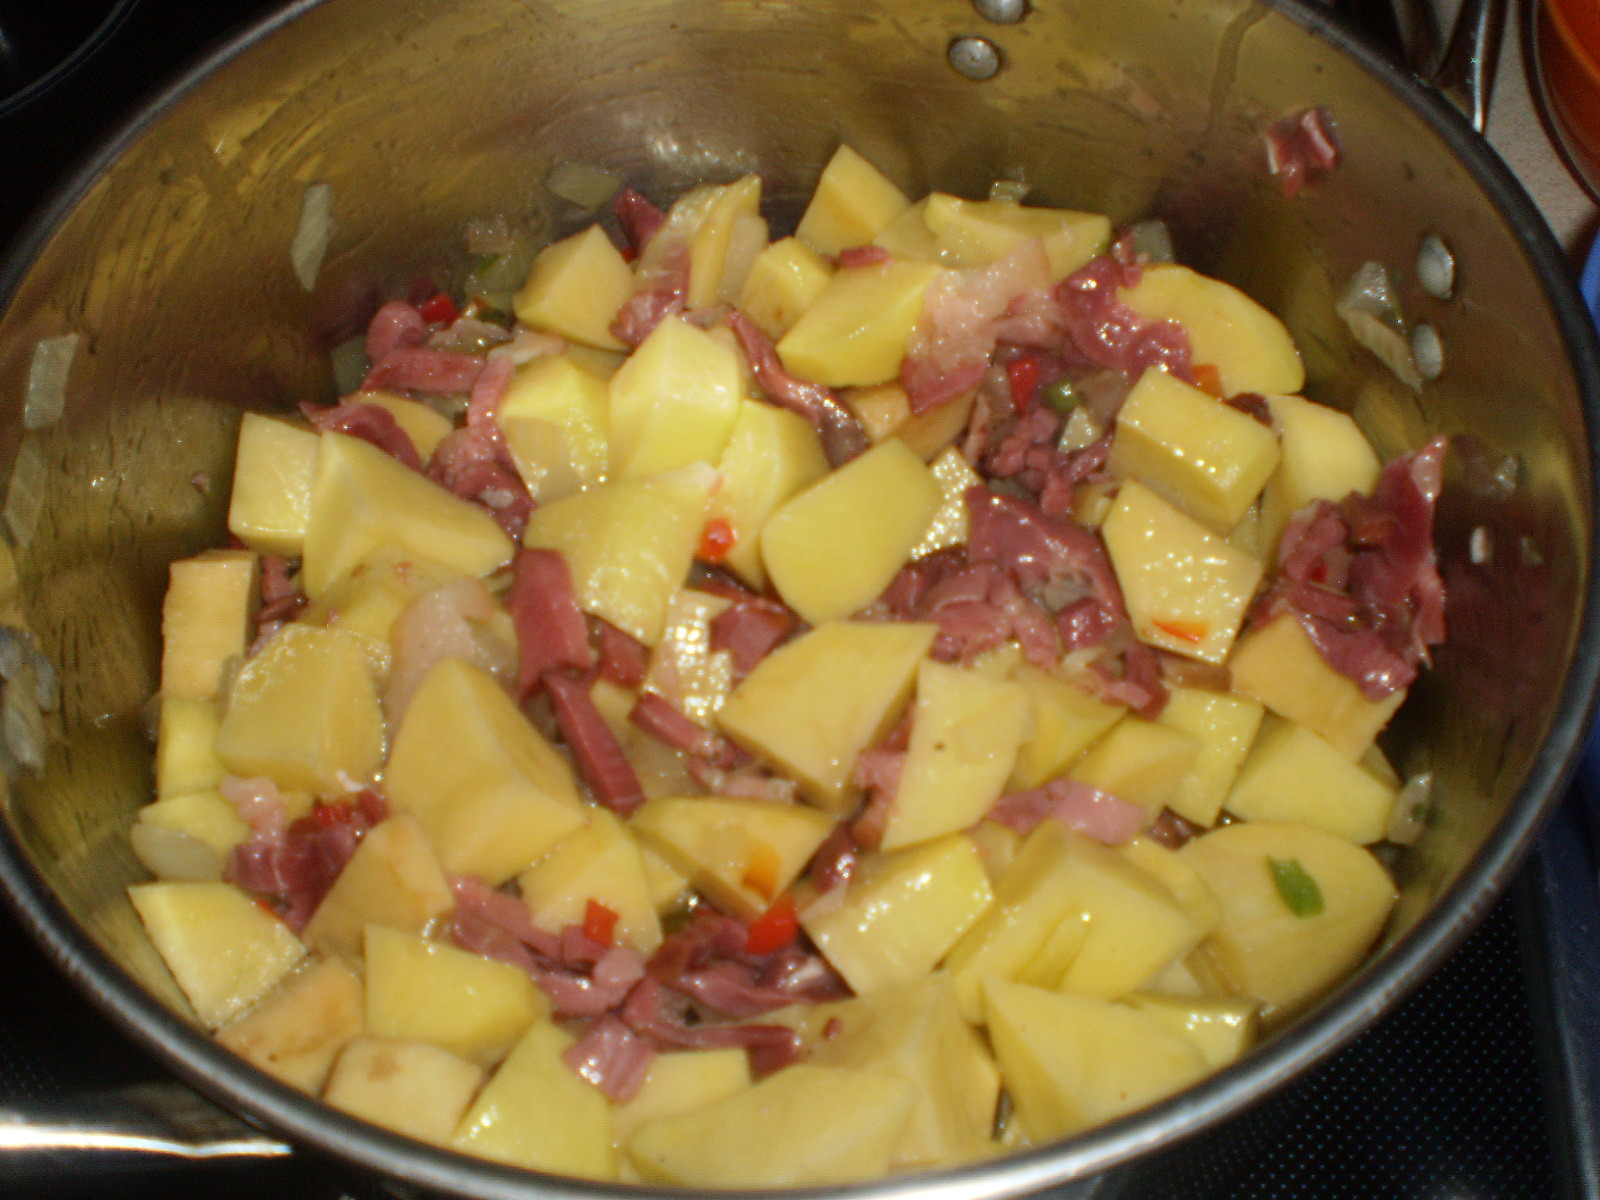 Tocanita de cartofi cu ciuperci si bacon afumat